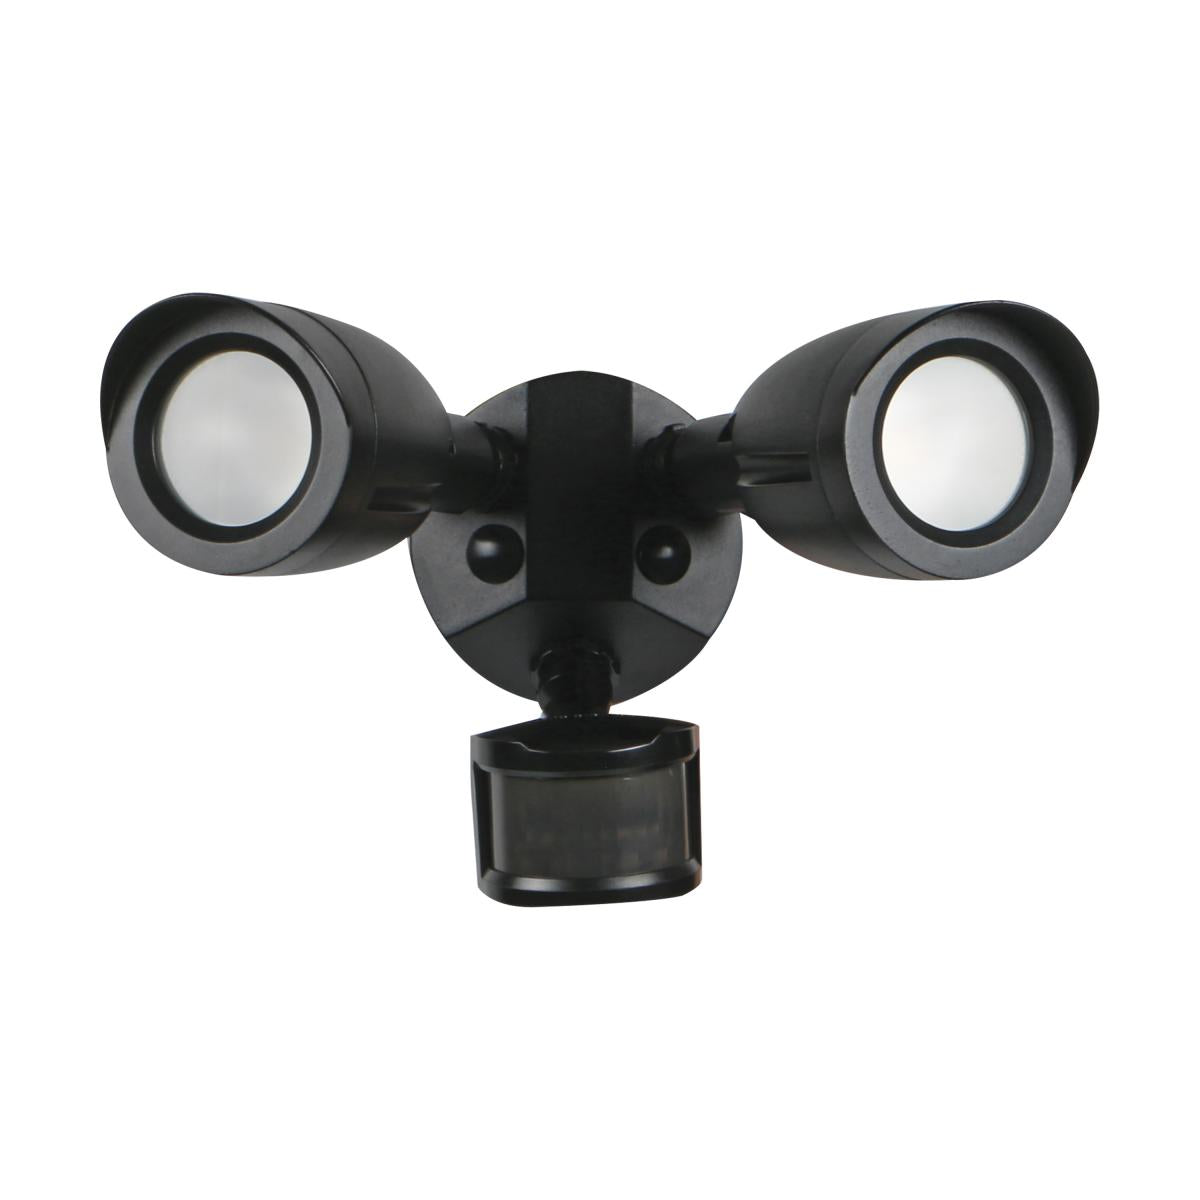 Satco 65-721 LED Security Light Dual Head Motion Sensor Included Black Finish 4000K